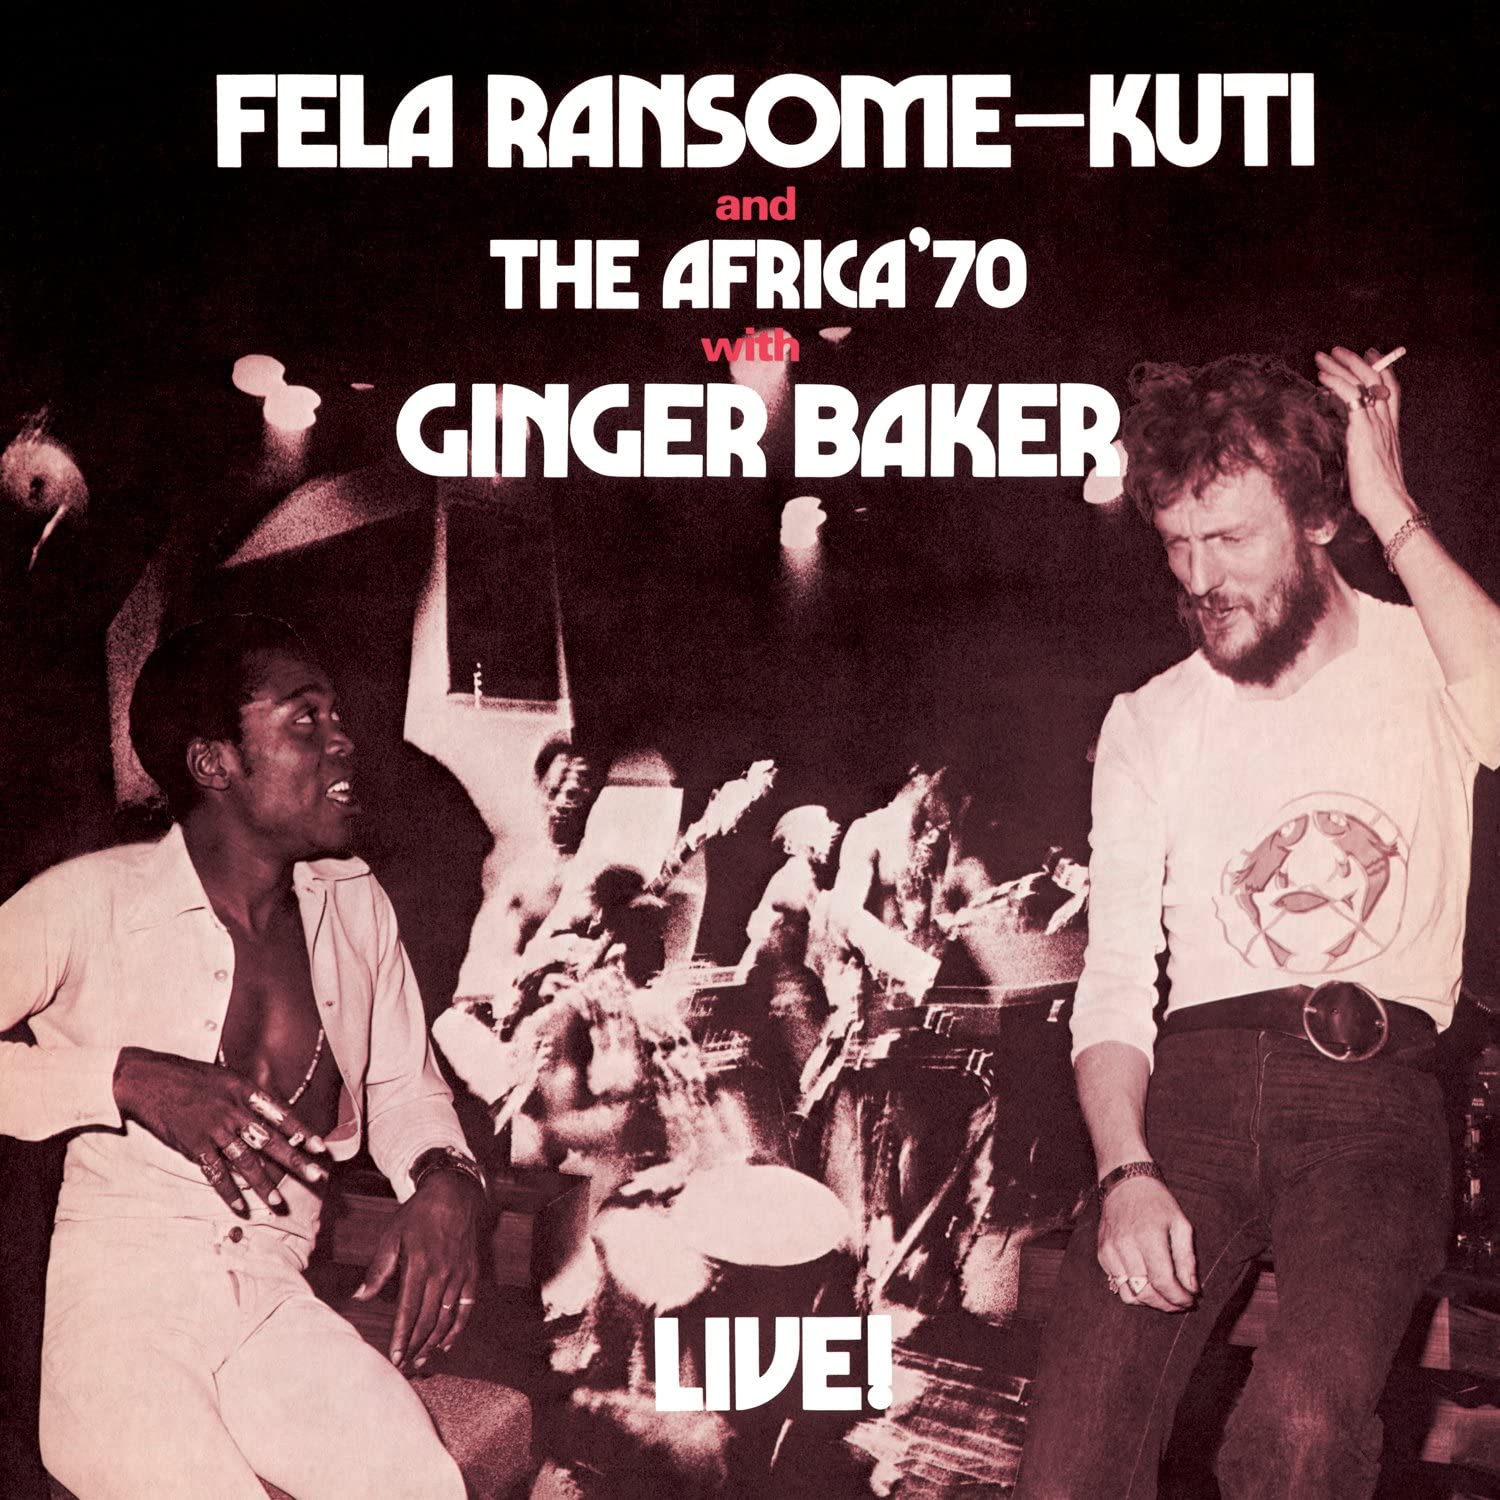 Fela with Ginger Baker, Live! Album of the Month June 2021